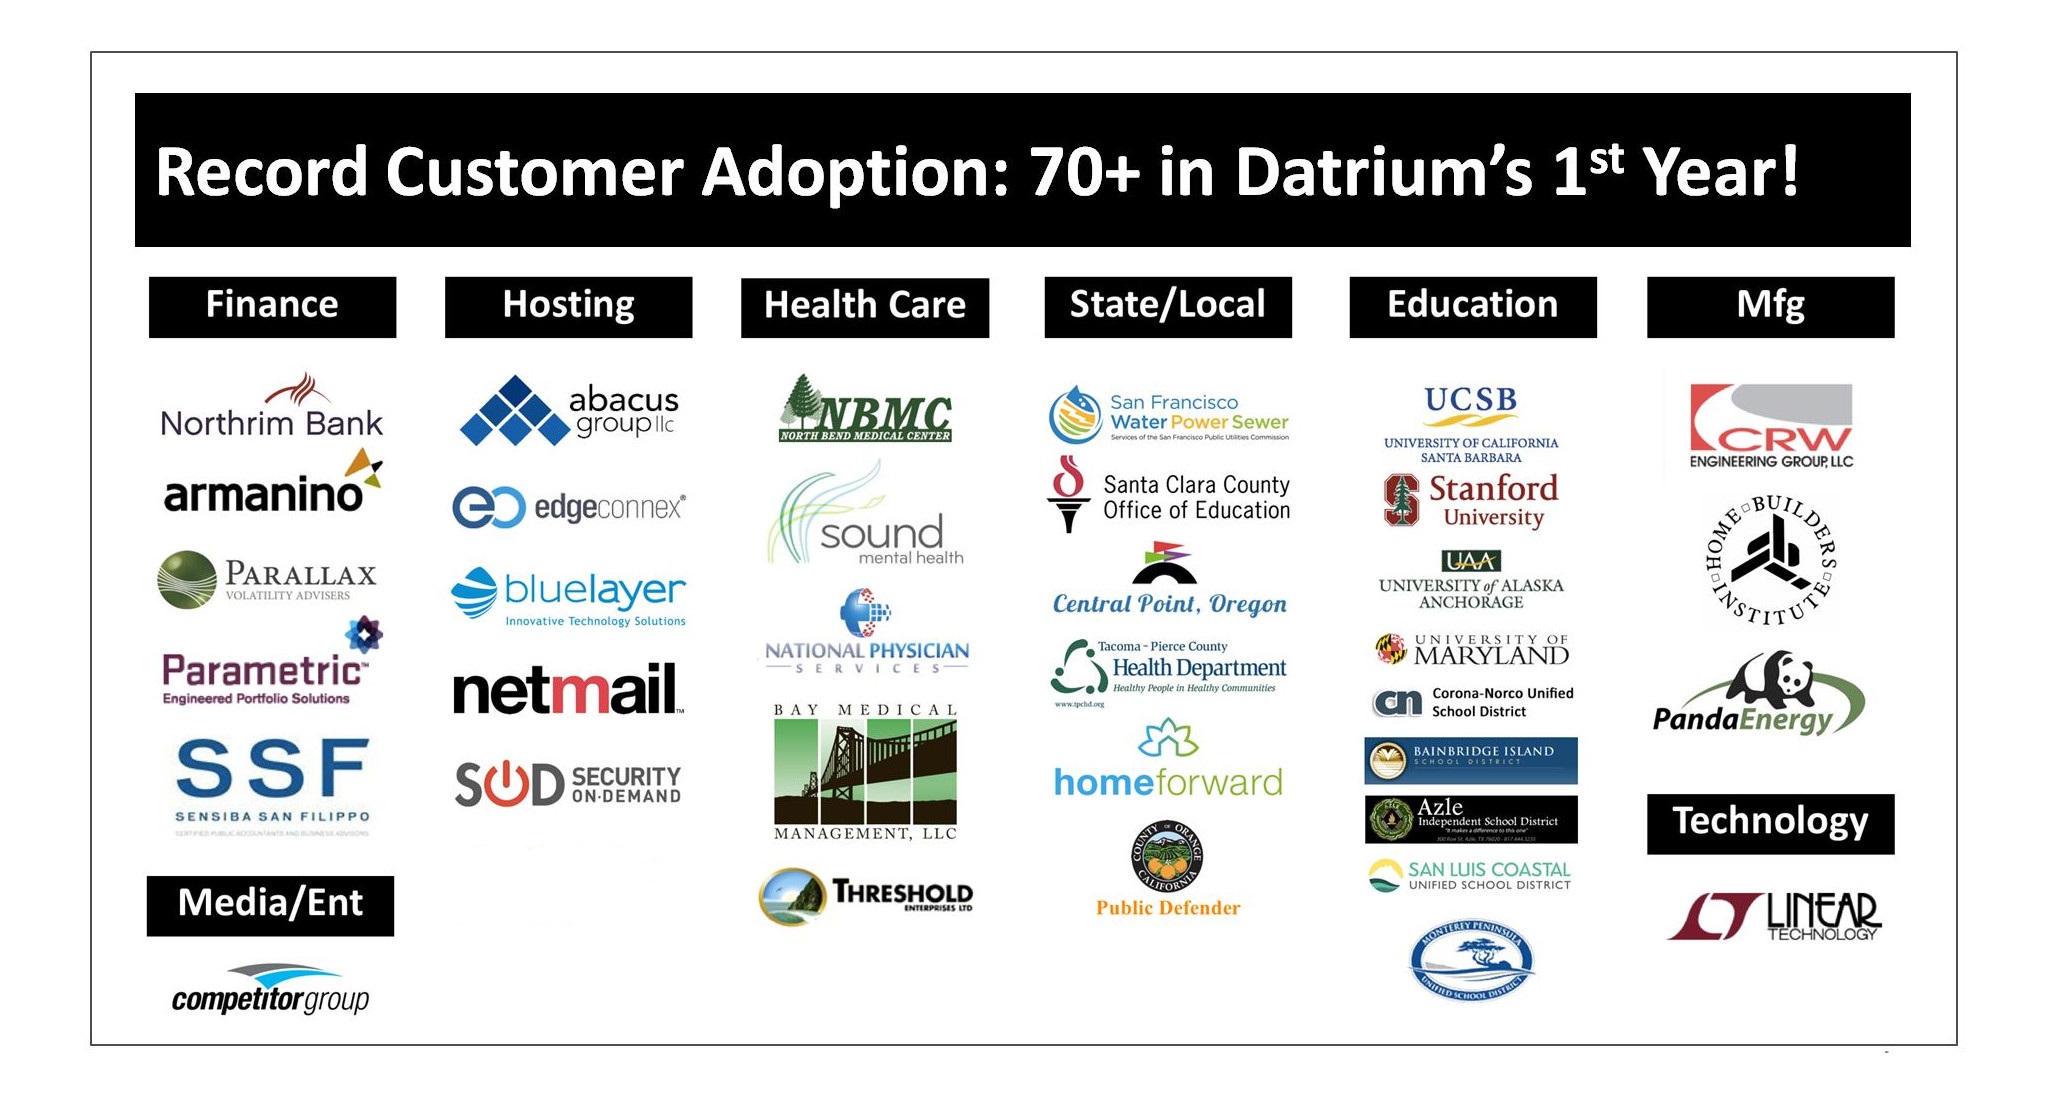 Record Customer Adoption: 70+ in Datrium's 1st Year!